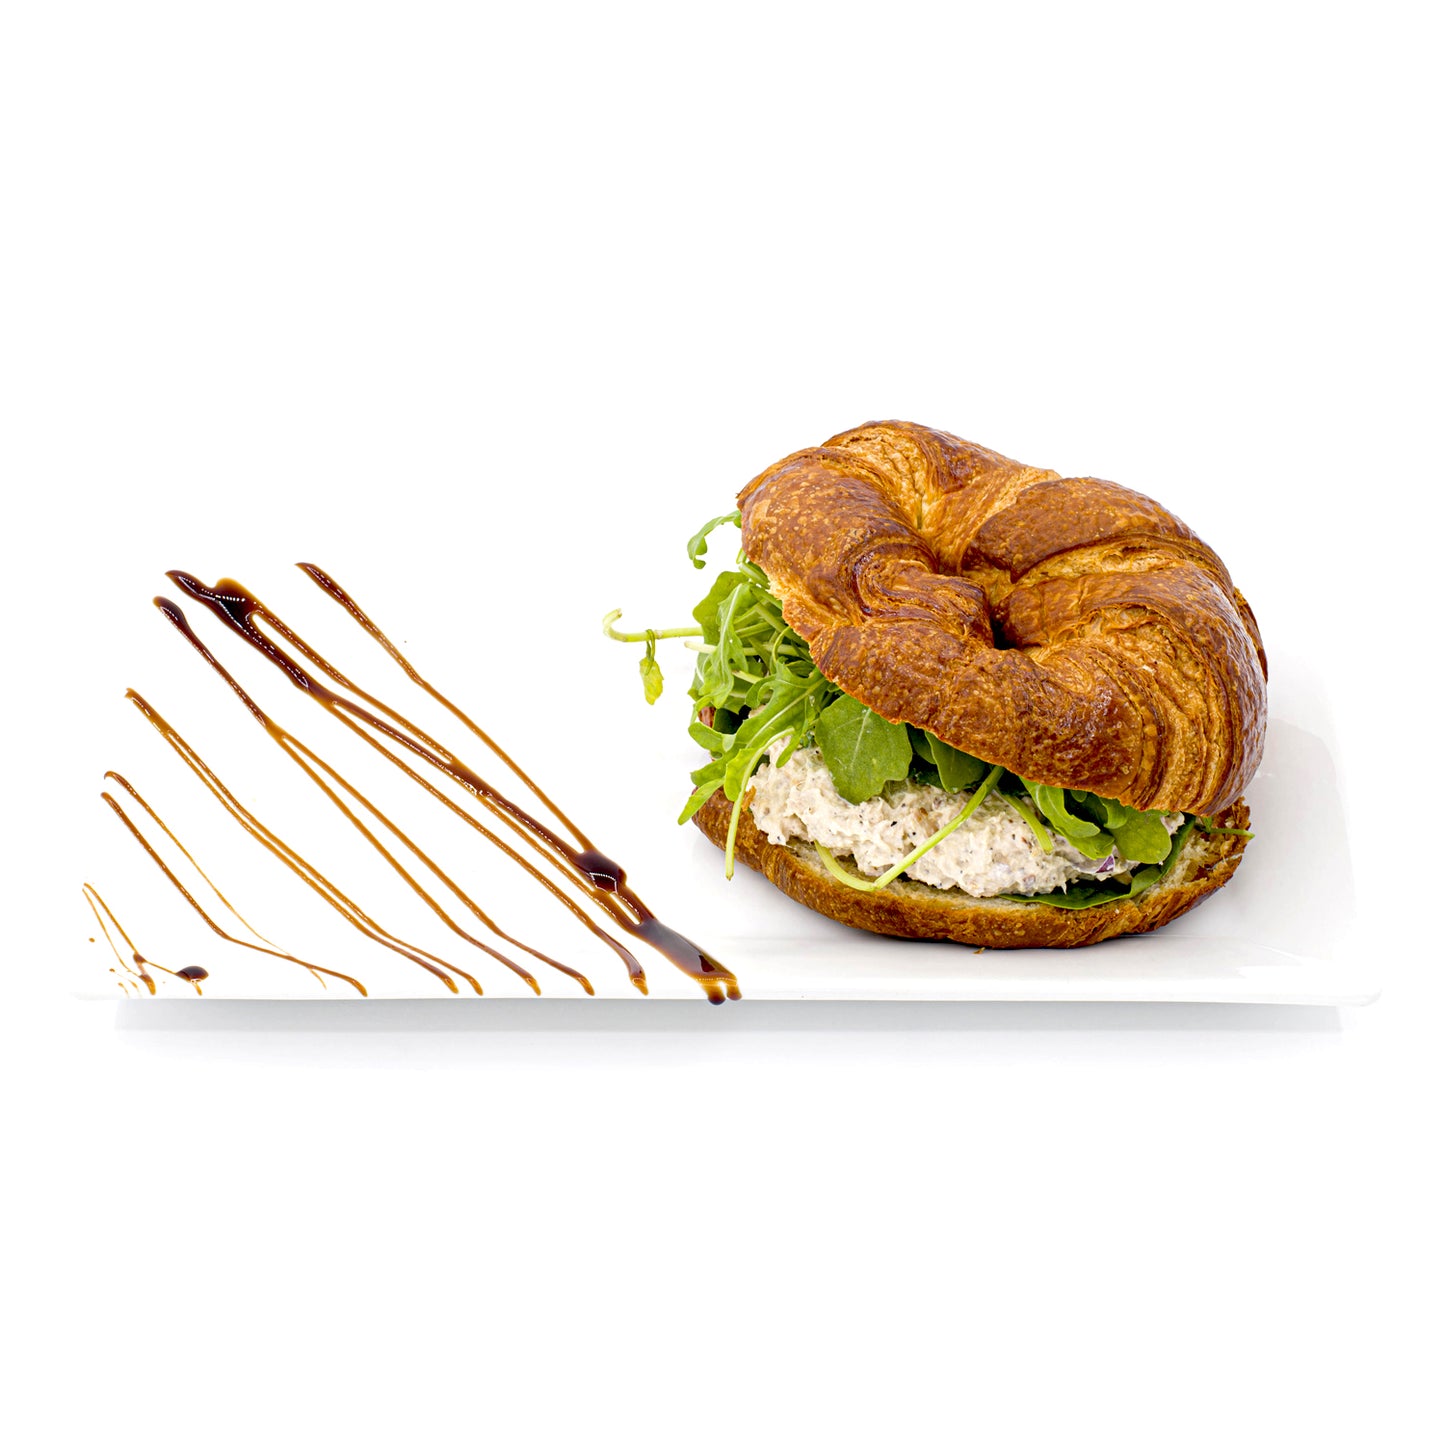 Tuna Croissant Sandwich